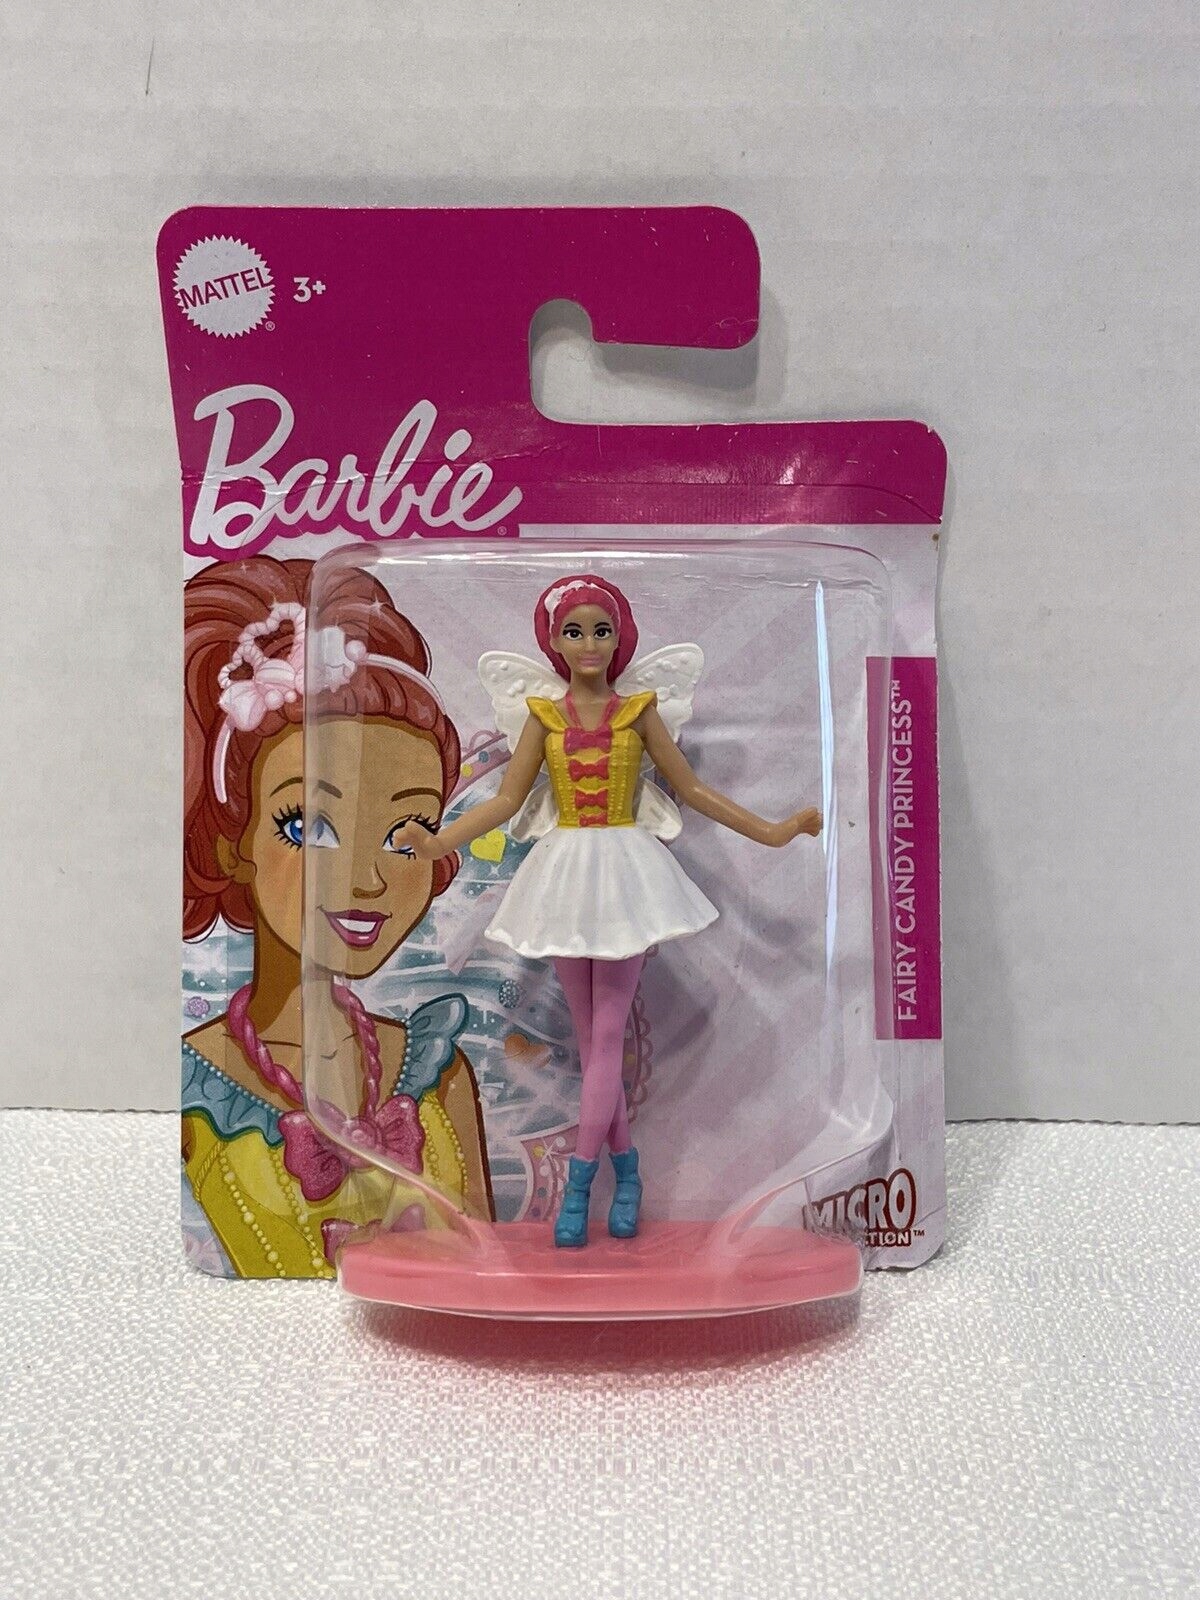 Barbie Island Princess Mini Dolls & Playsets